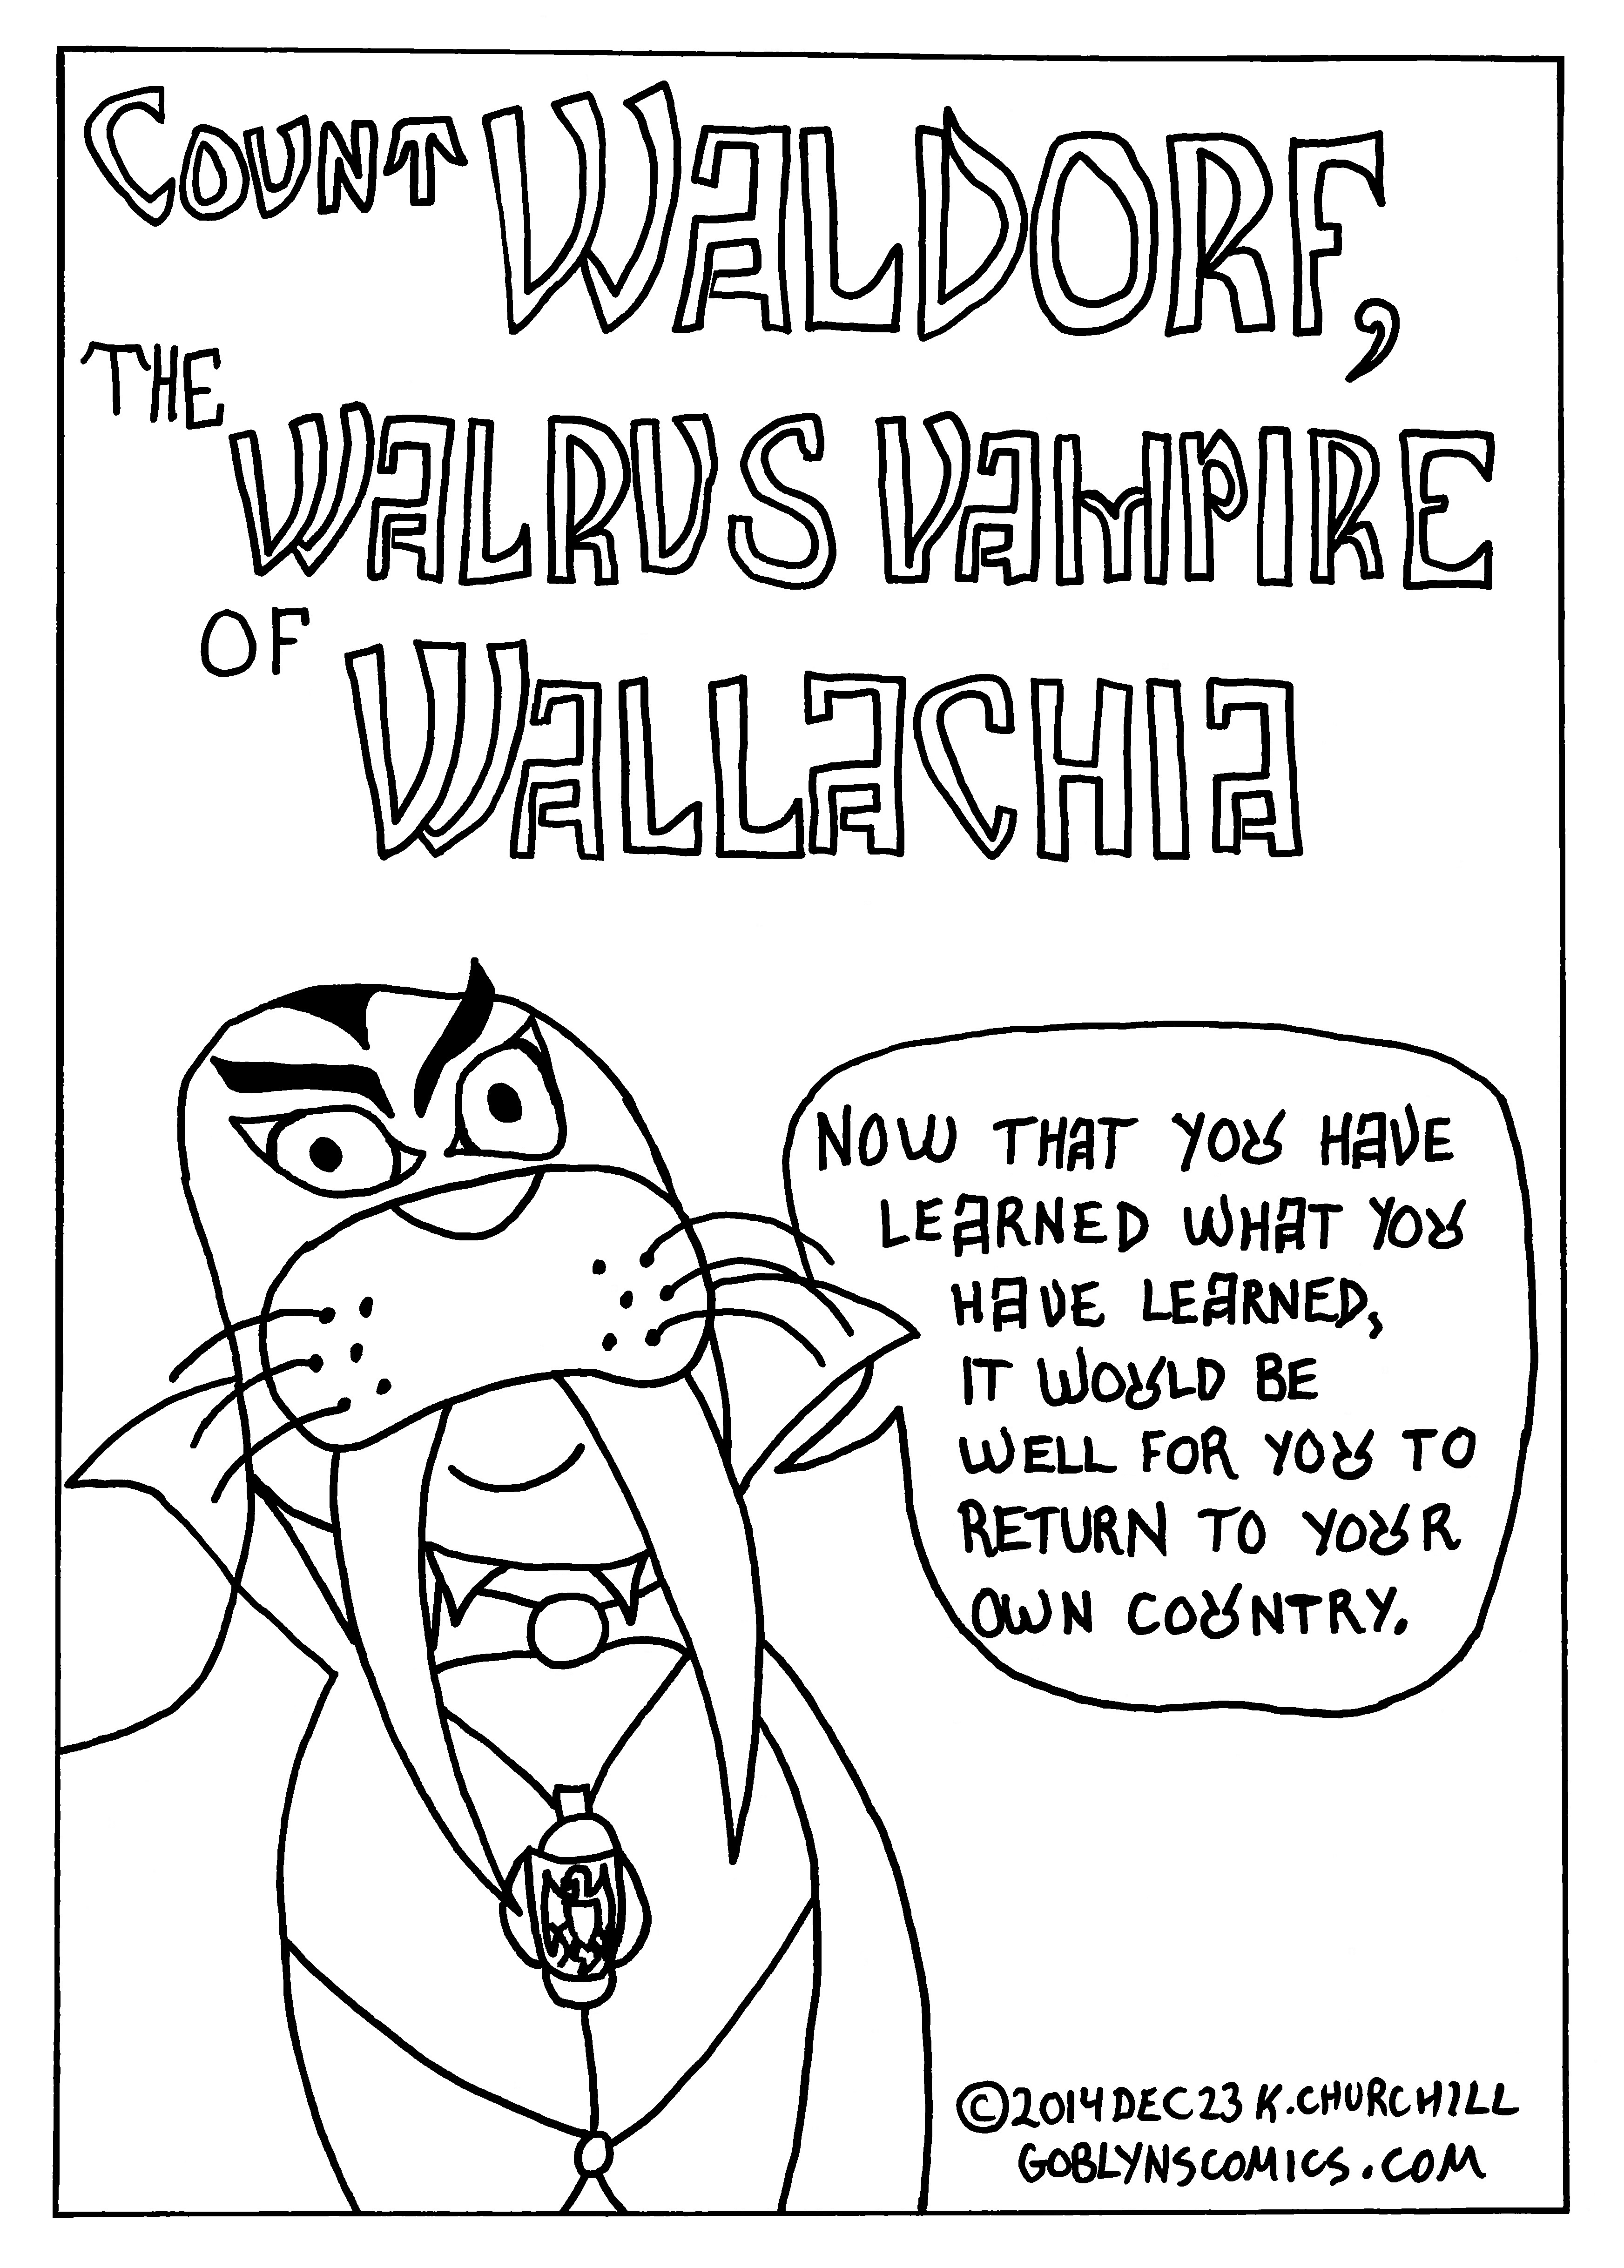 Count Waldorf, the Walrus Vampire of Wallachia